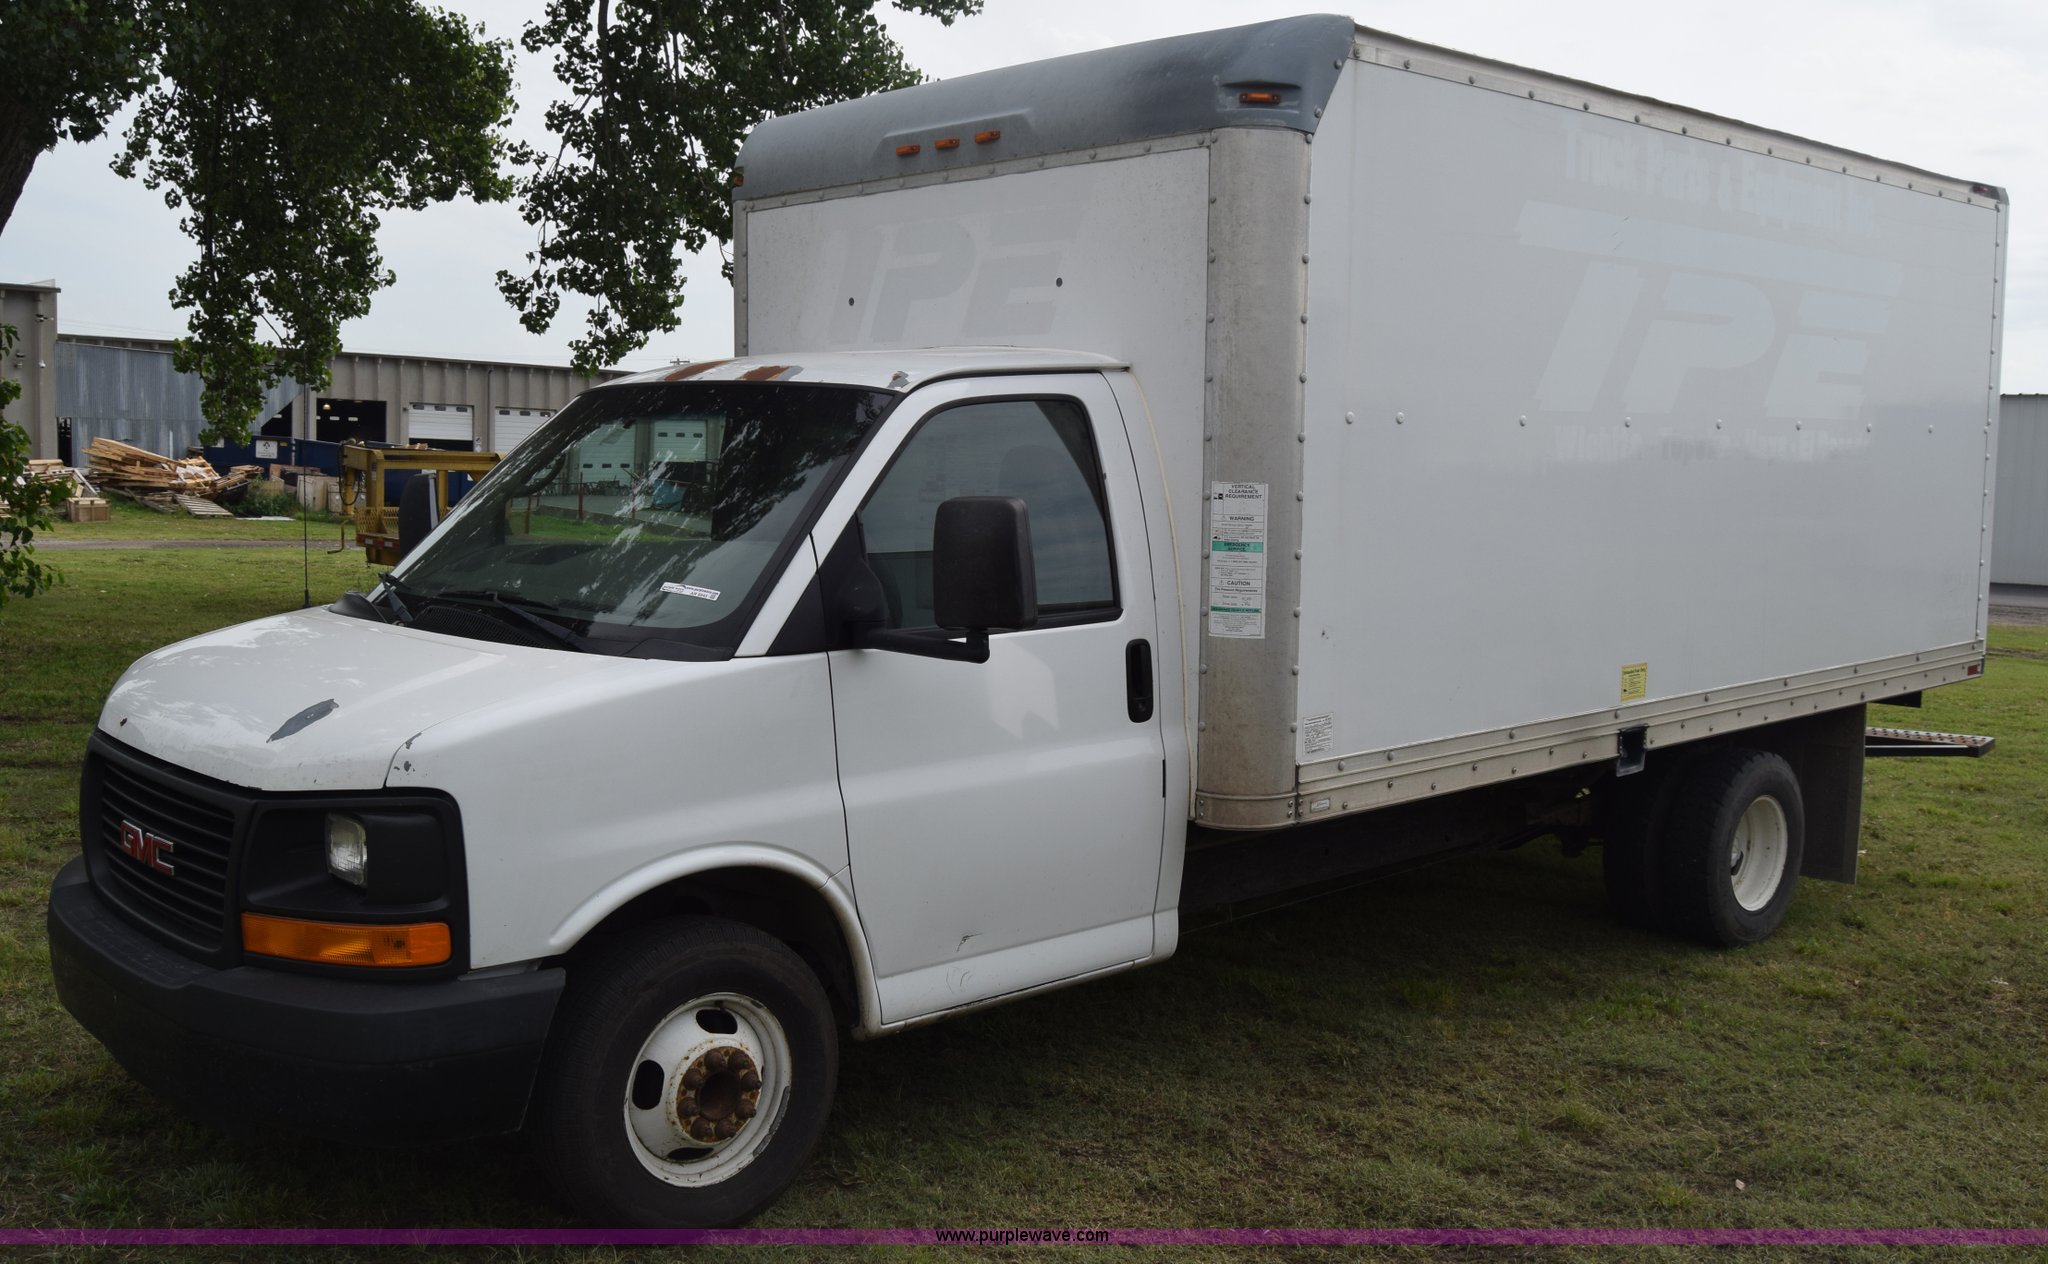 2004 GMC Savana G3500 Cargo box truck in Wichita, KS | Item AR9543 sold |  Purple Wave